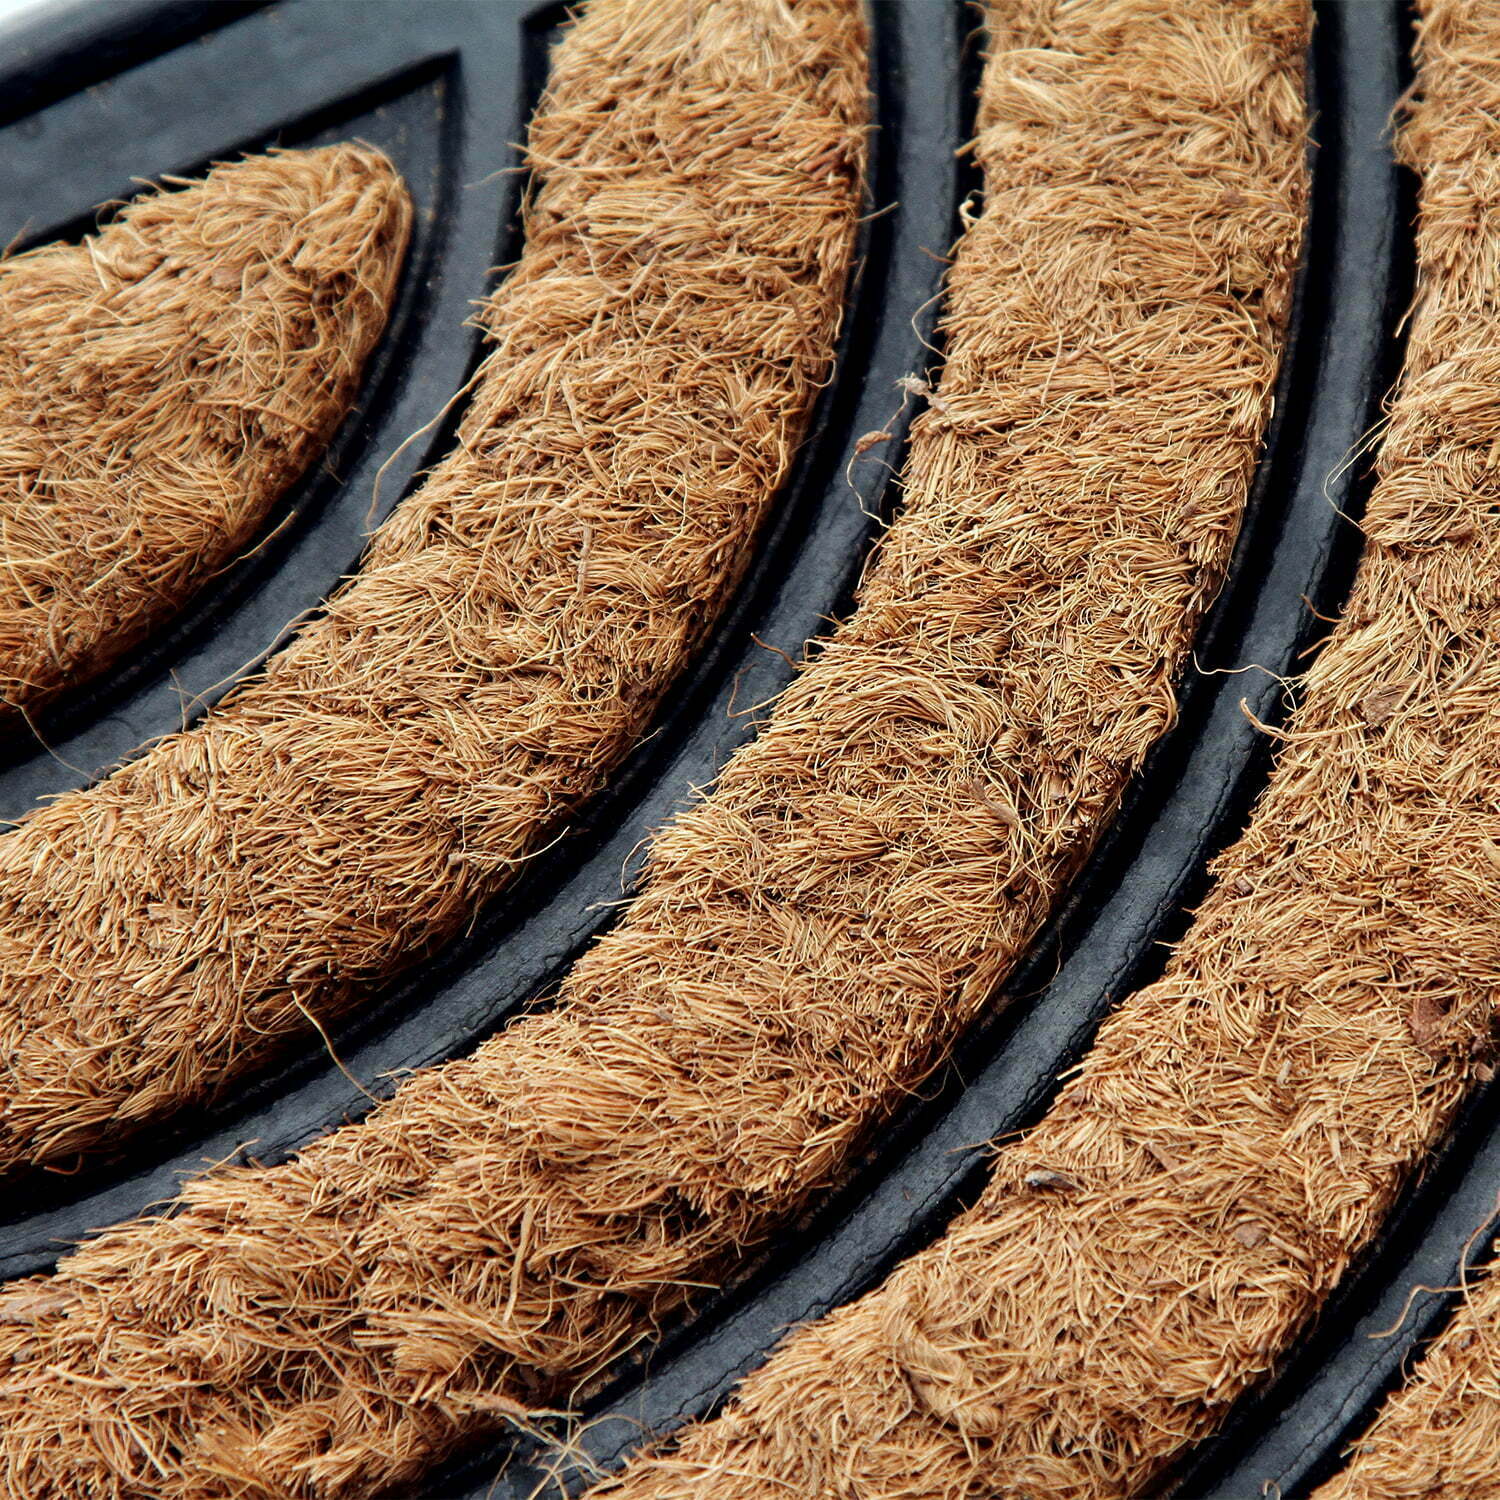 The Peasant Arc Close up tufted coir matting